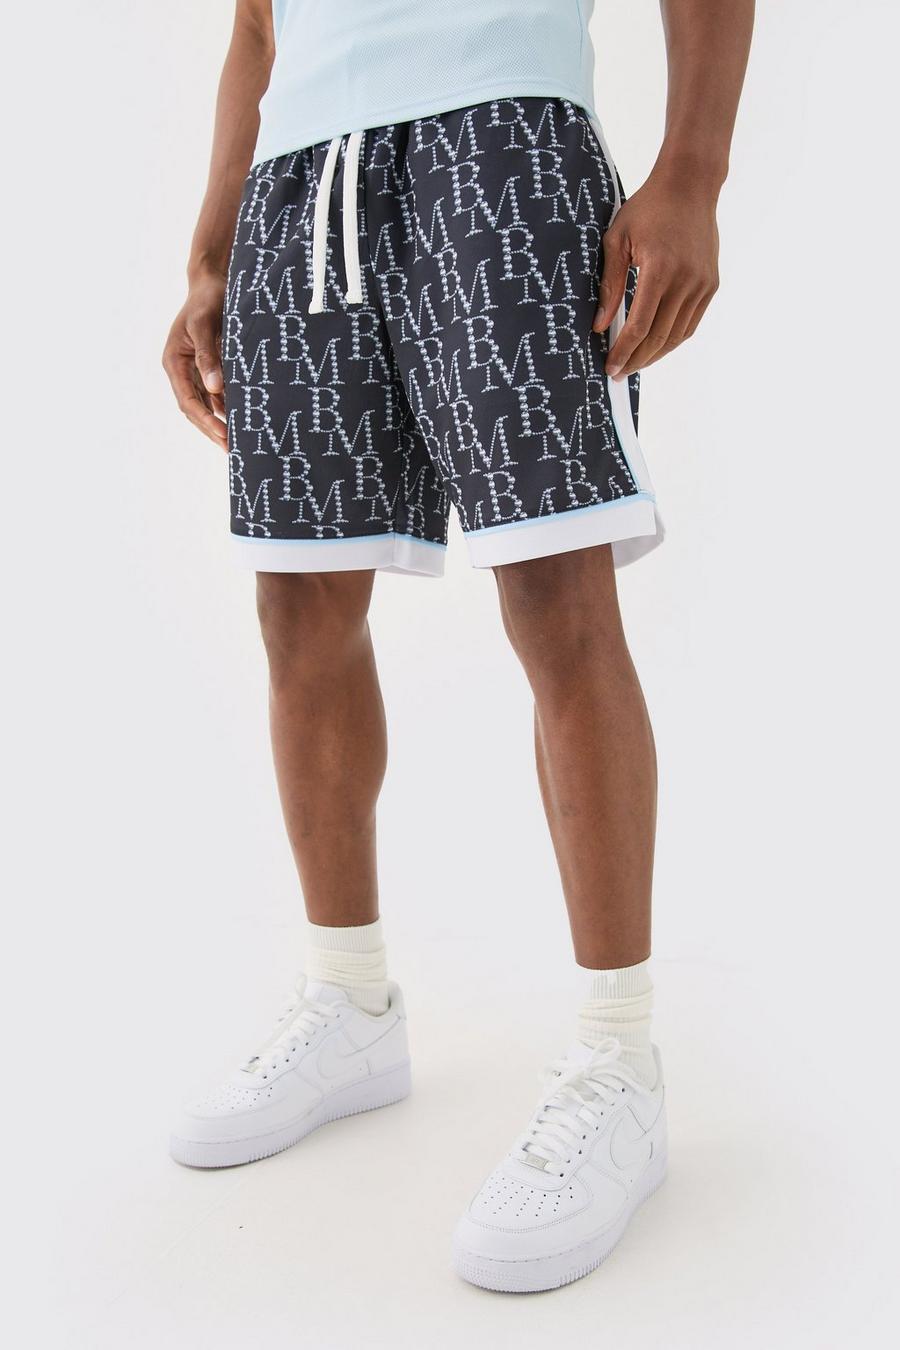 Lockere Mesh Basketball-Shorts mit Bm Print, Black